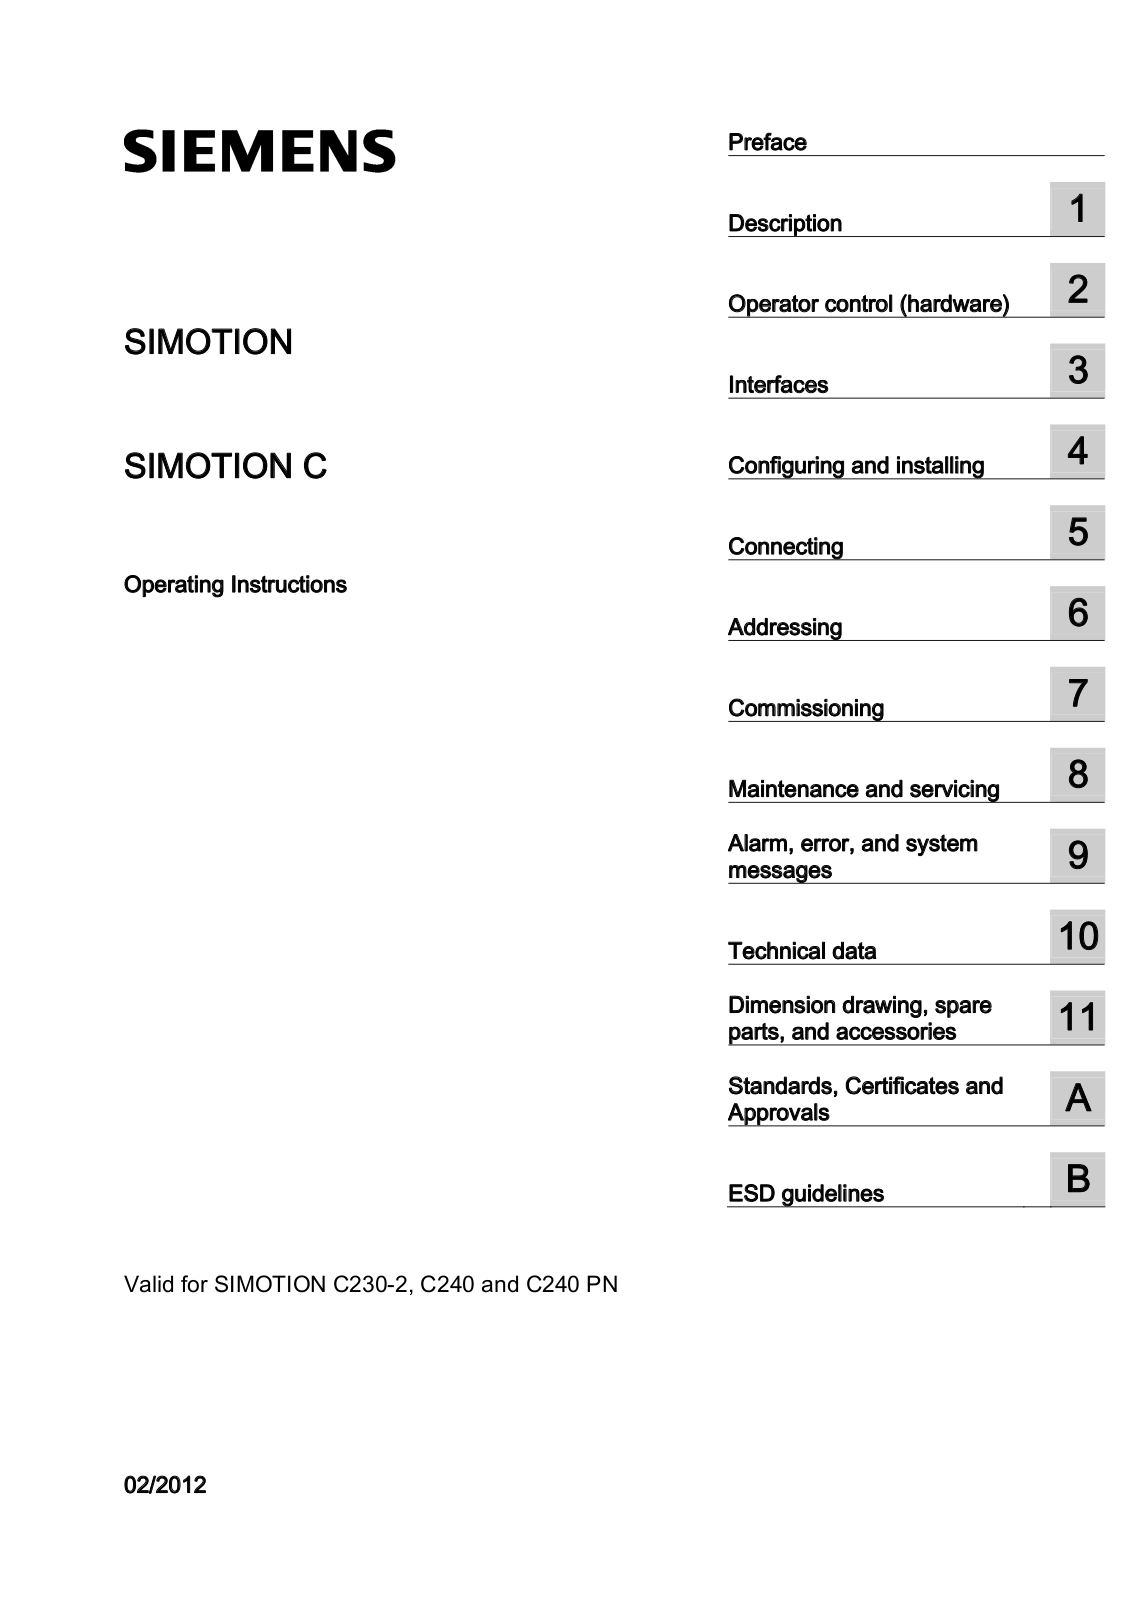 Siemens SIMOTION C, SIMOTION C230-2, SIMOTION C240 PN, SIMOTION C240, SIMOTION C Series Operating Instructions Manual